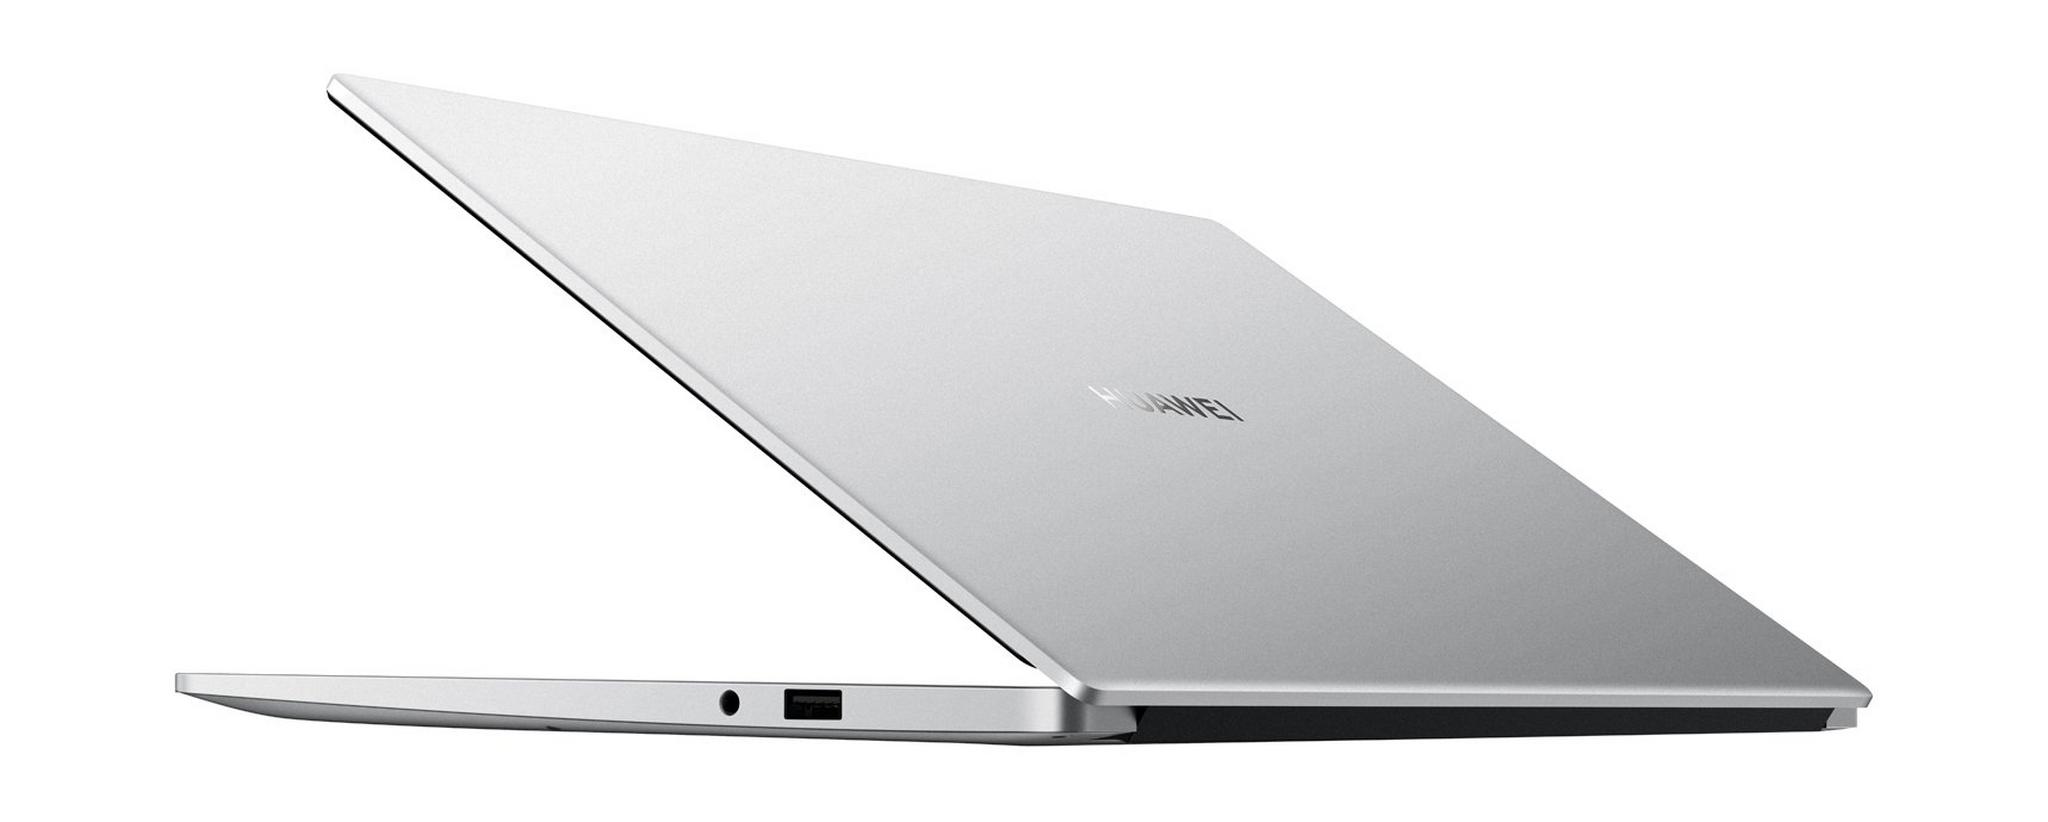 Huawei MateBook D 14 Intel Core i5 10th Gen. 8GB RAM 512GB SSD 14-inch Laptop - Grey